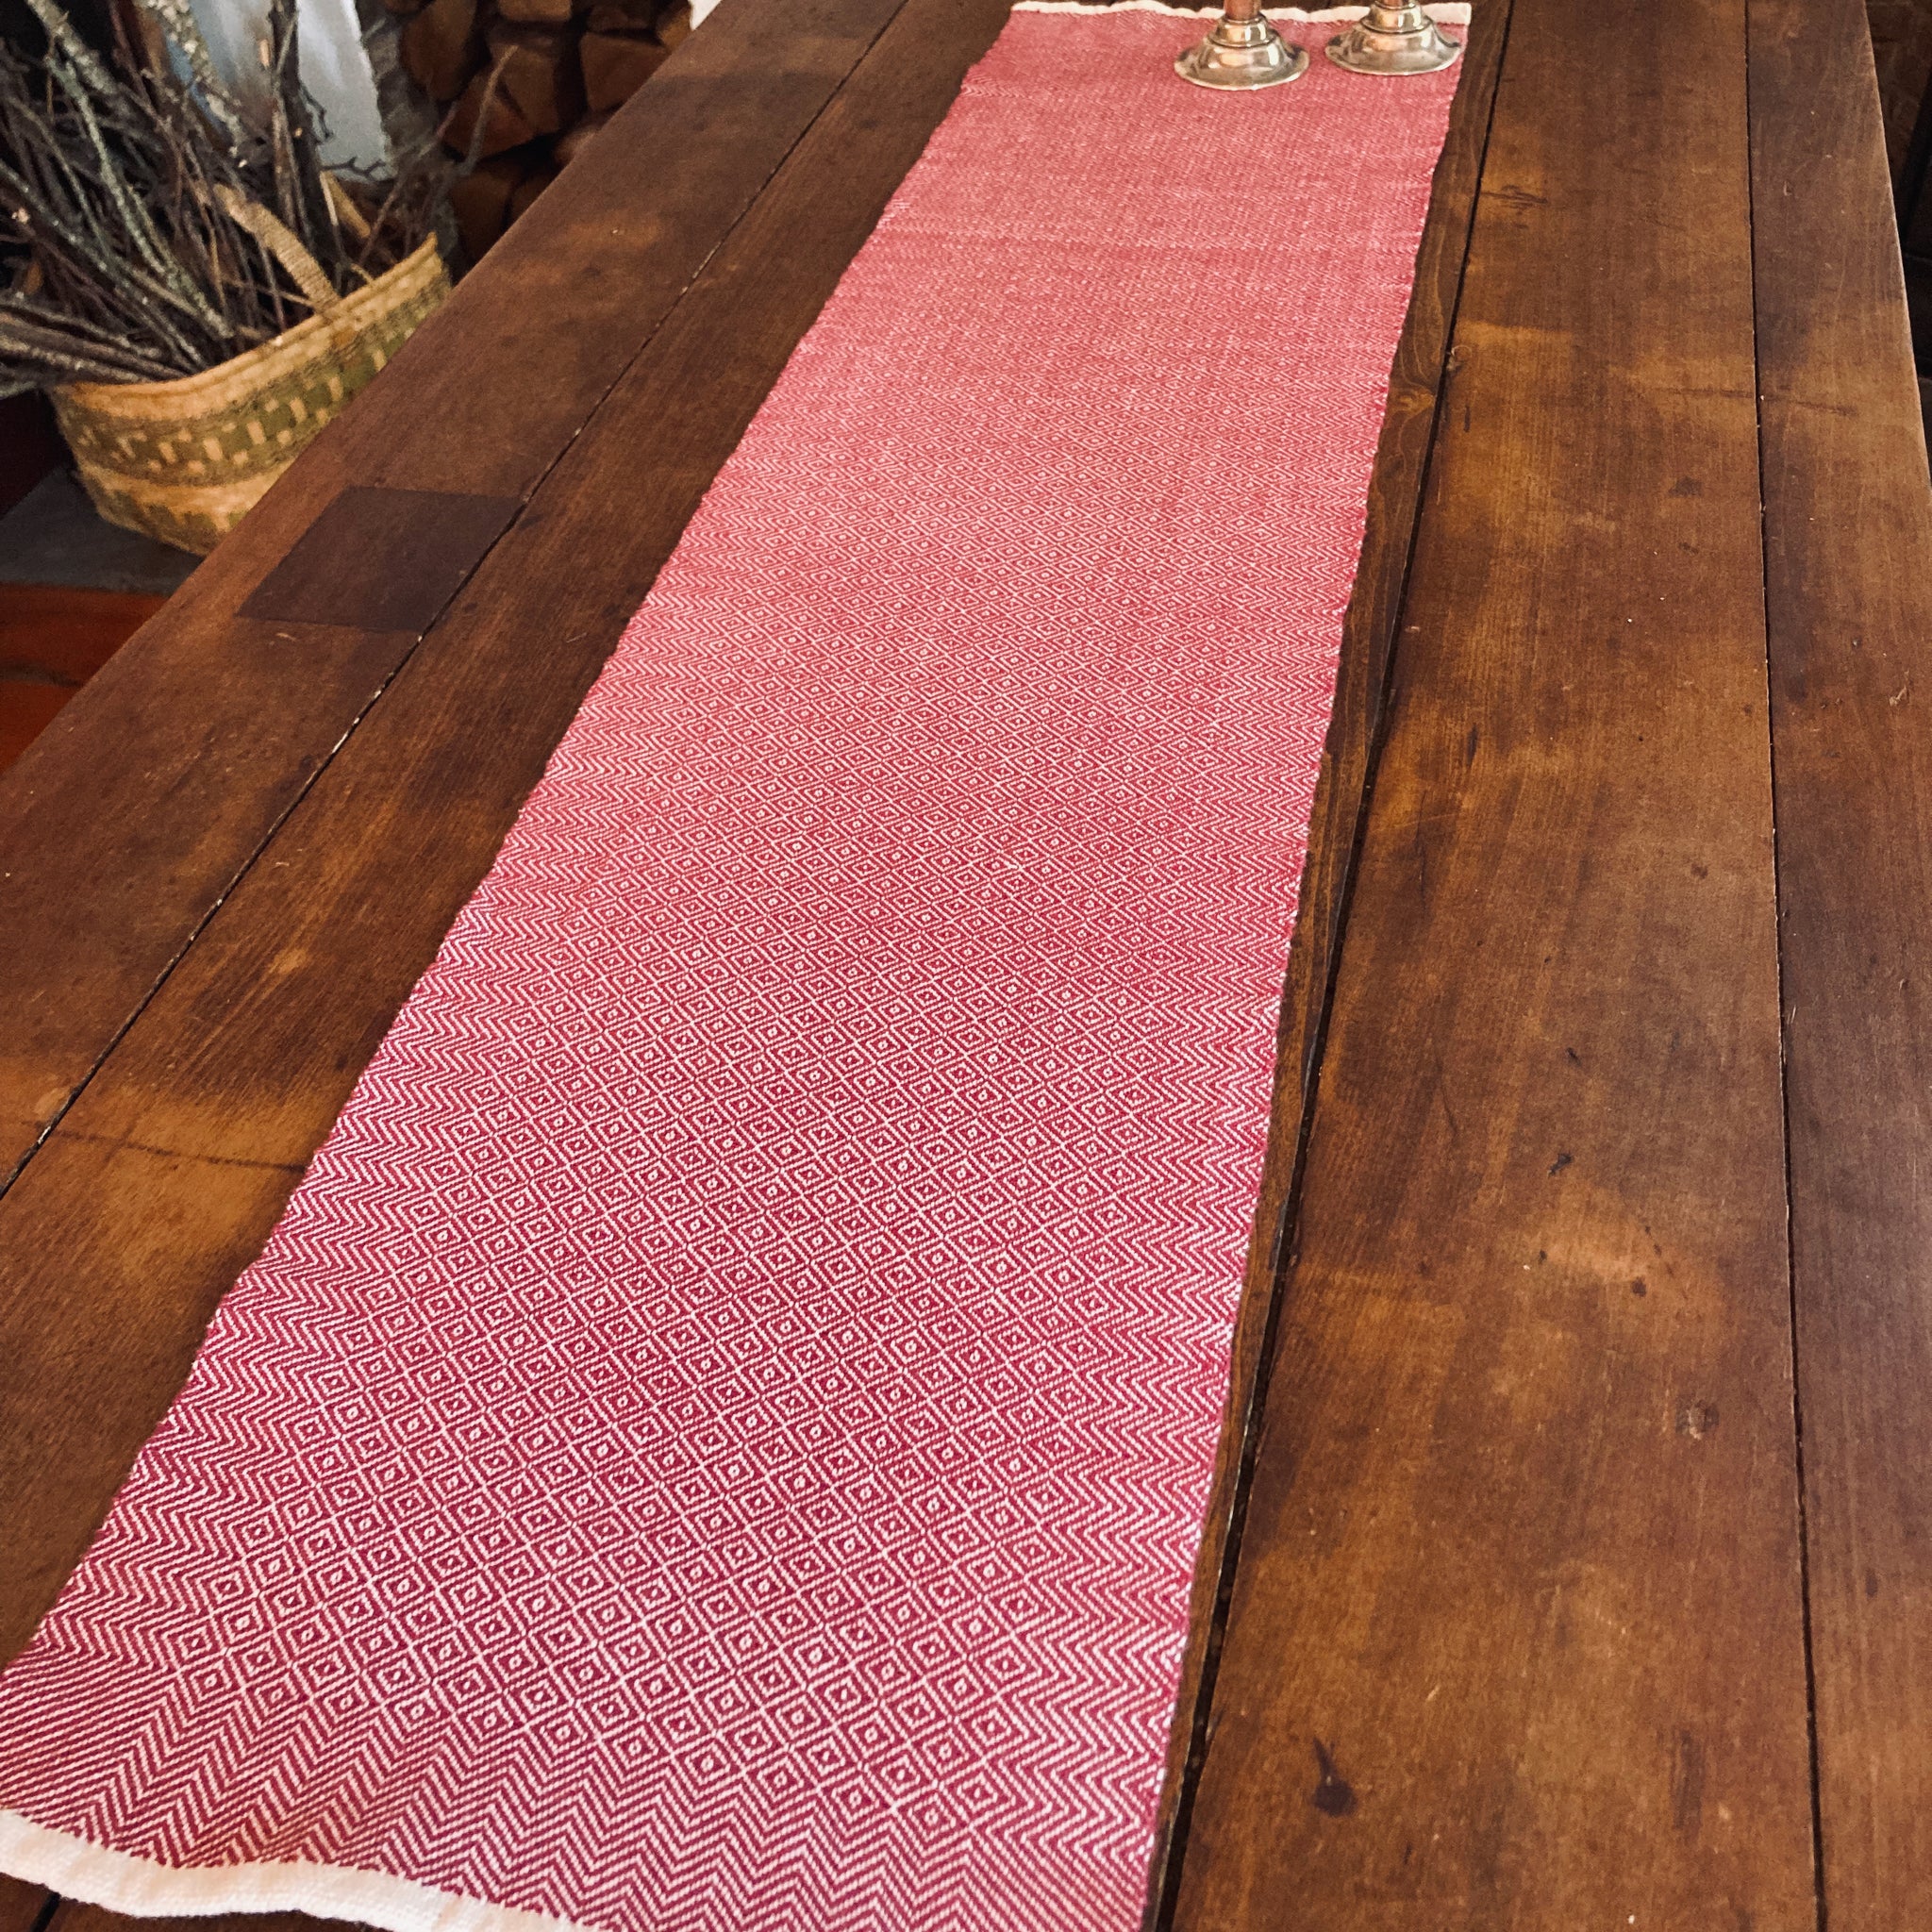 Handwoven Cotton Table Runner